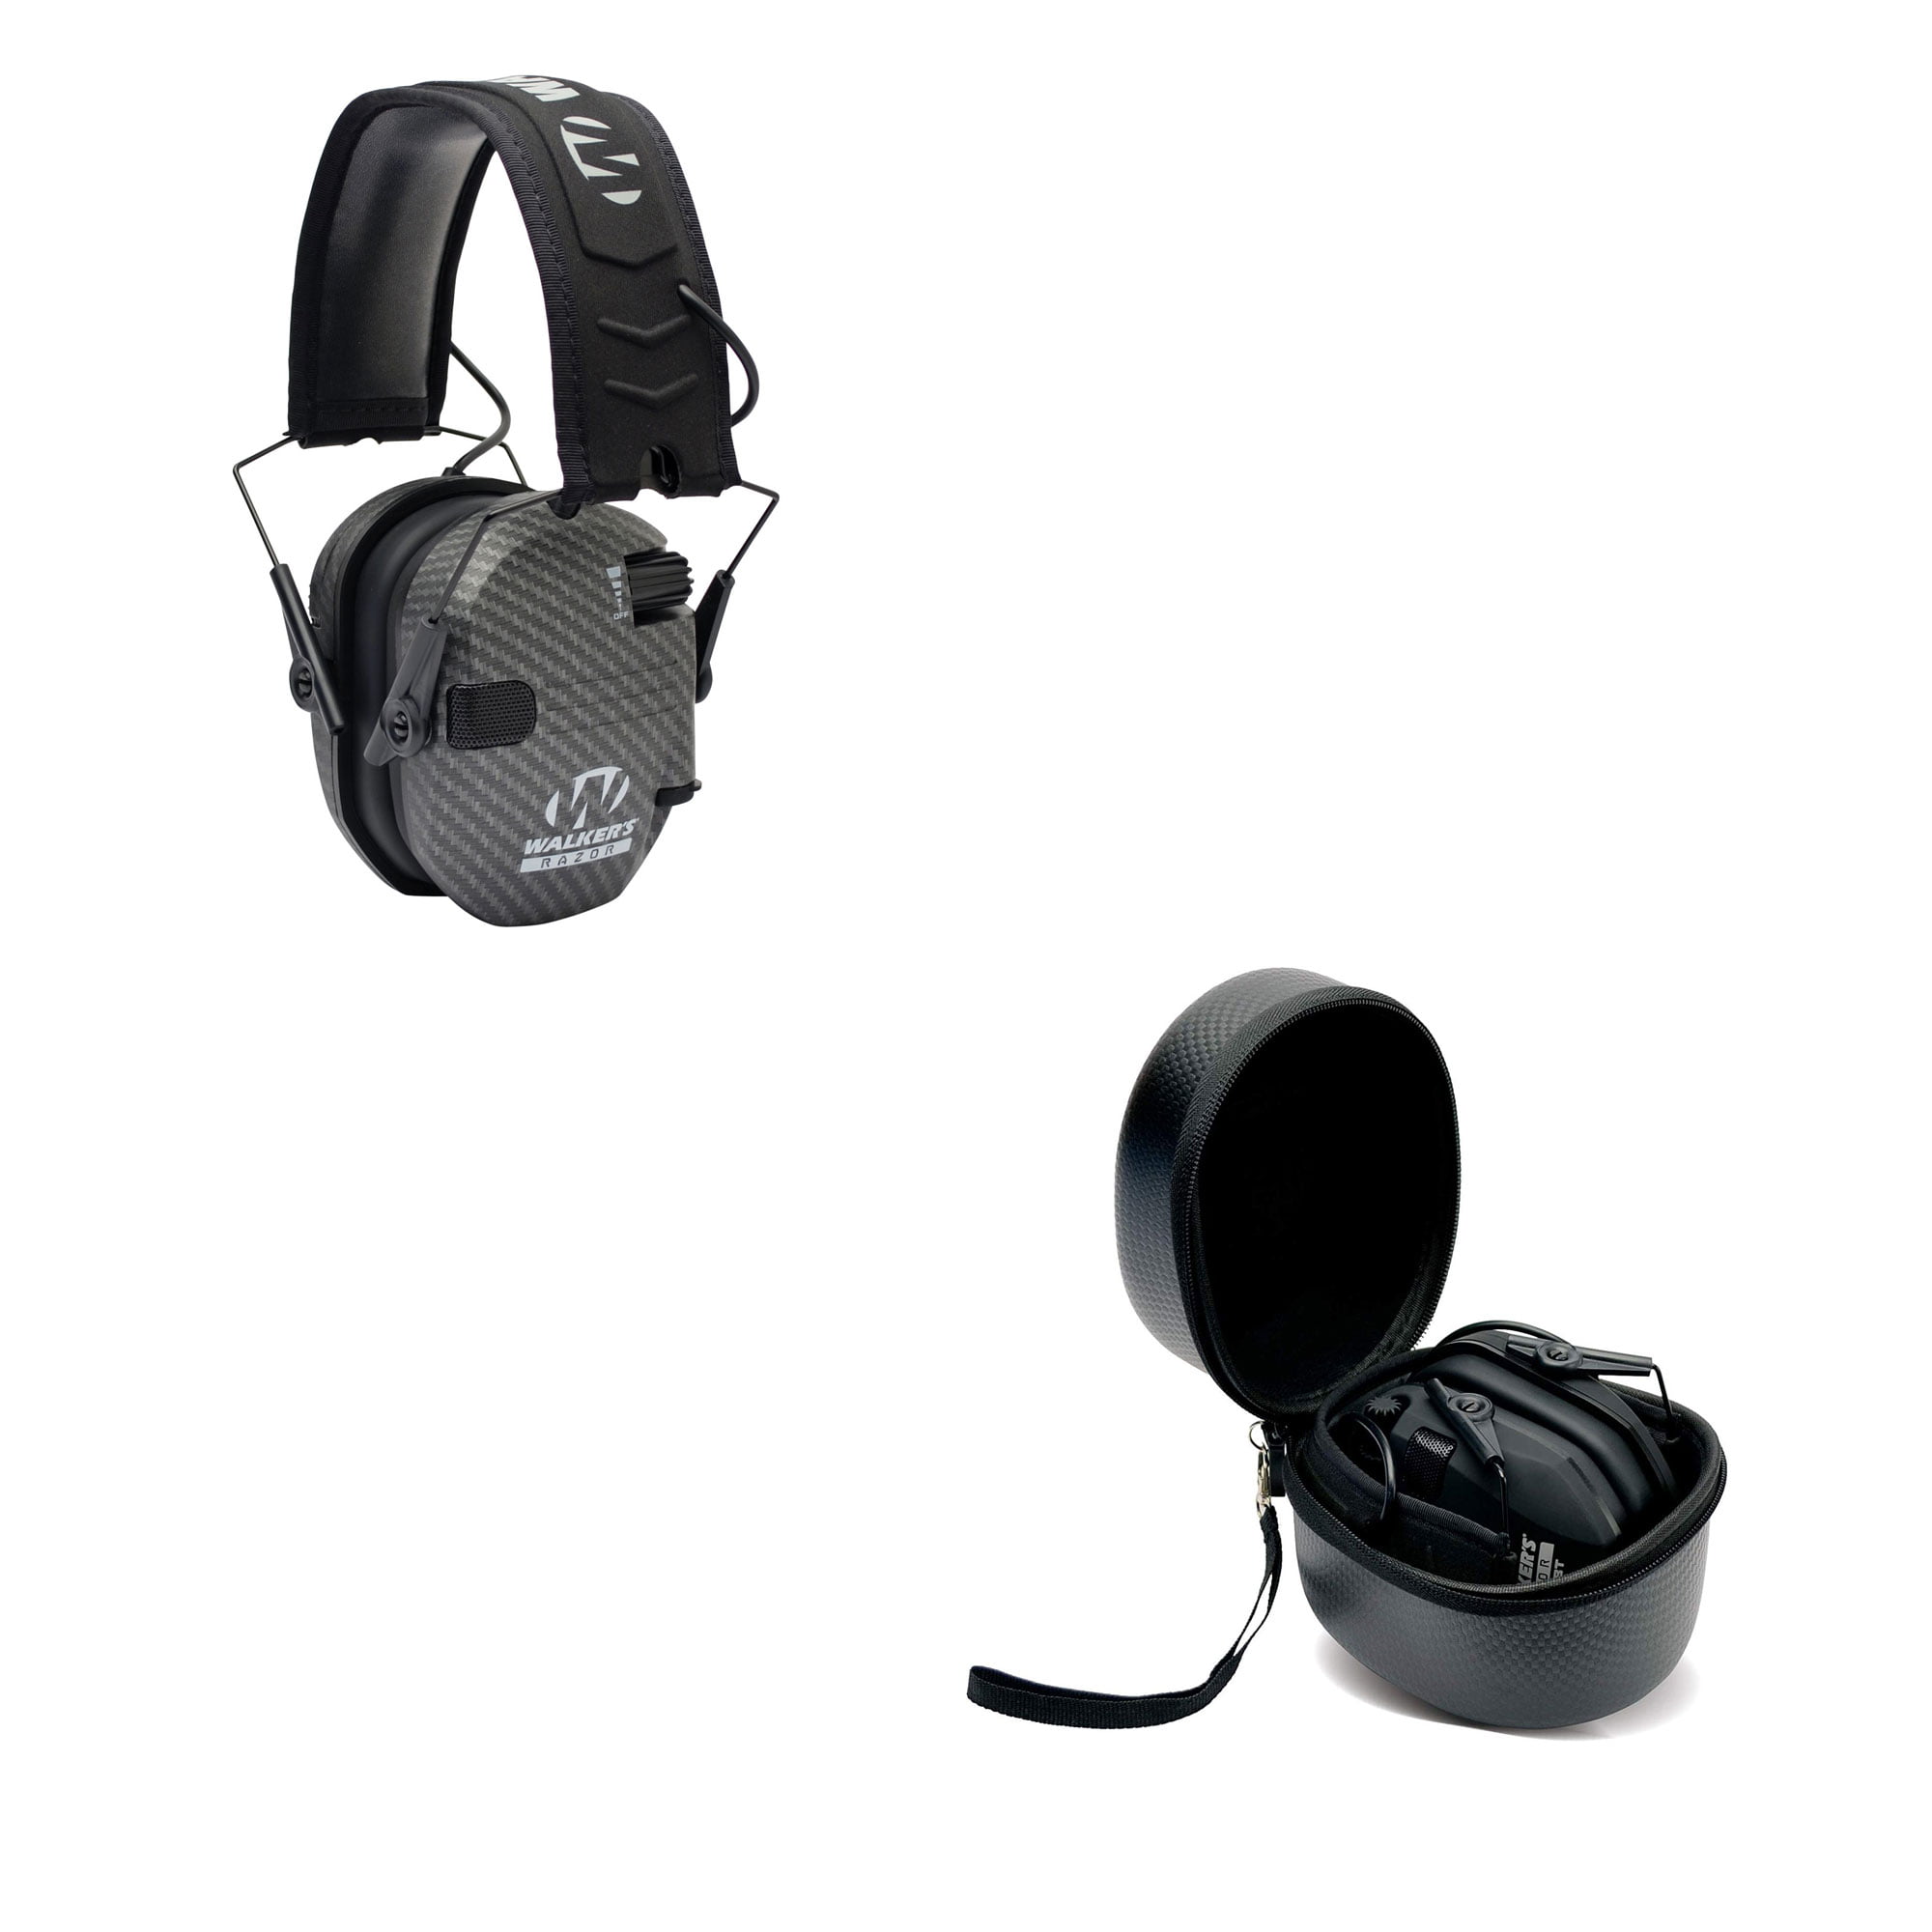 Walker’s Razor Slim GWP Electronic Hearing Protection & Sound Amp Ear Muffs 